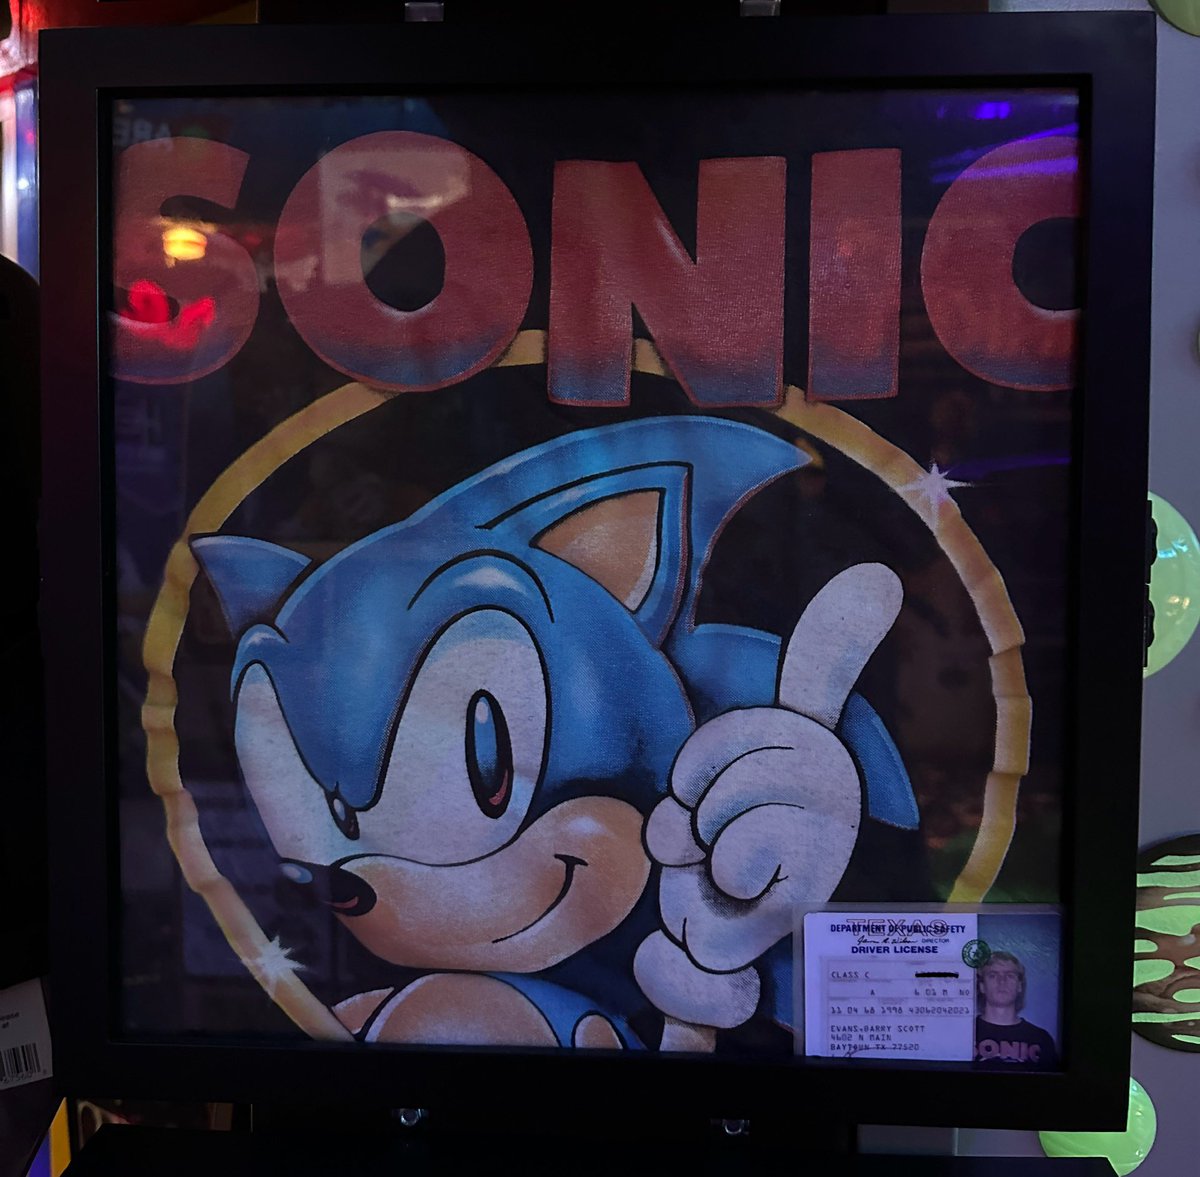 #SonicTheHedgehog 
#guinnessworldrecords
#Sega
#Sonic
#Segaofamerica
#SegaUK